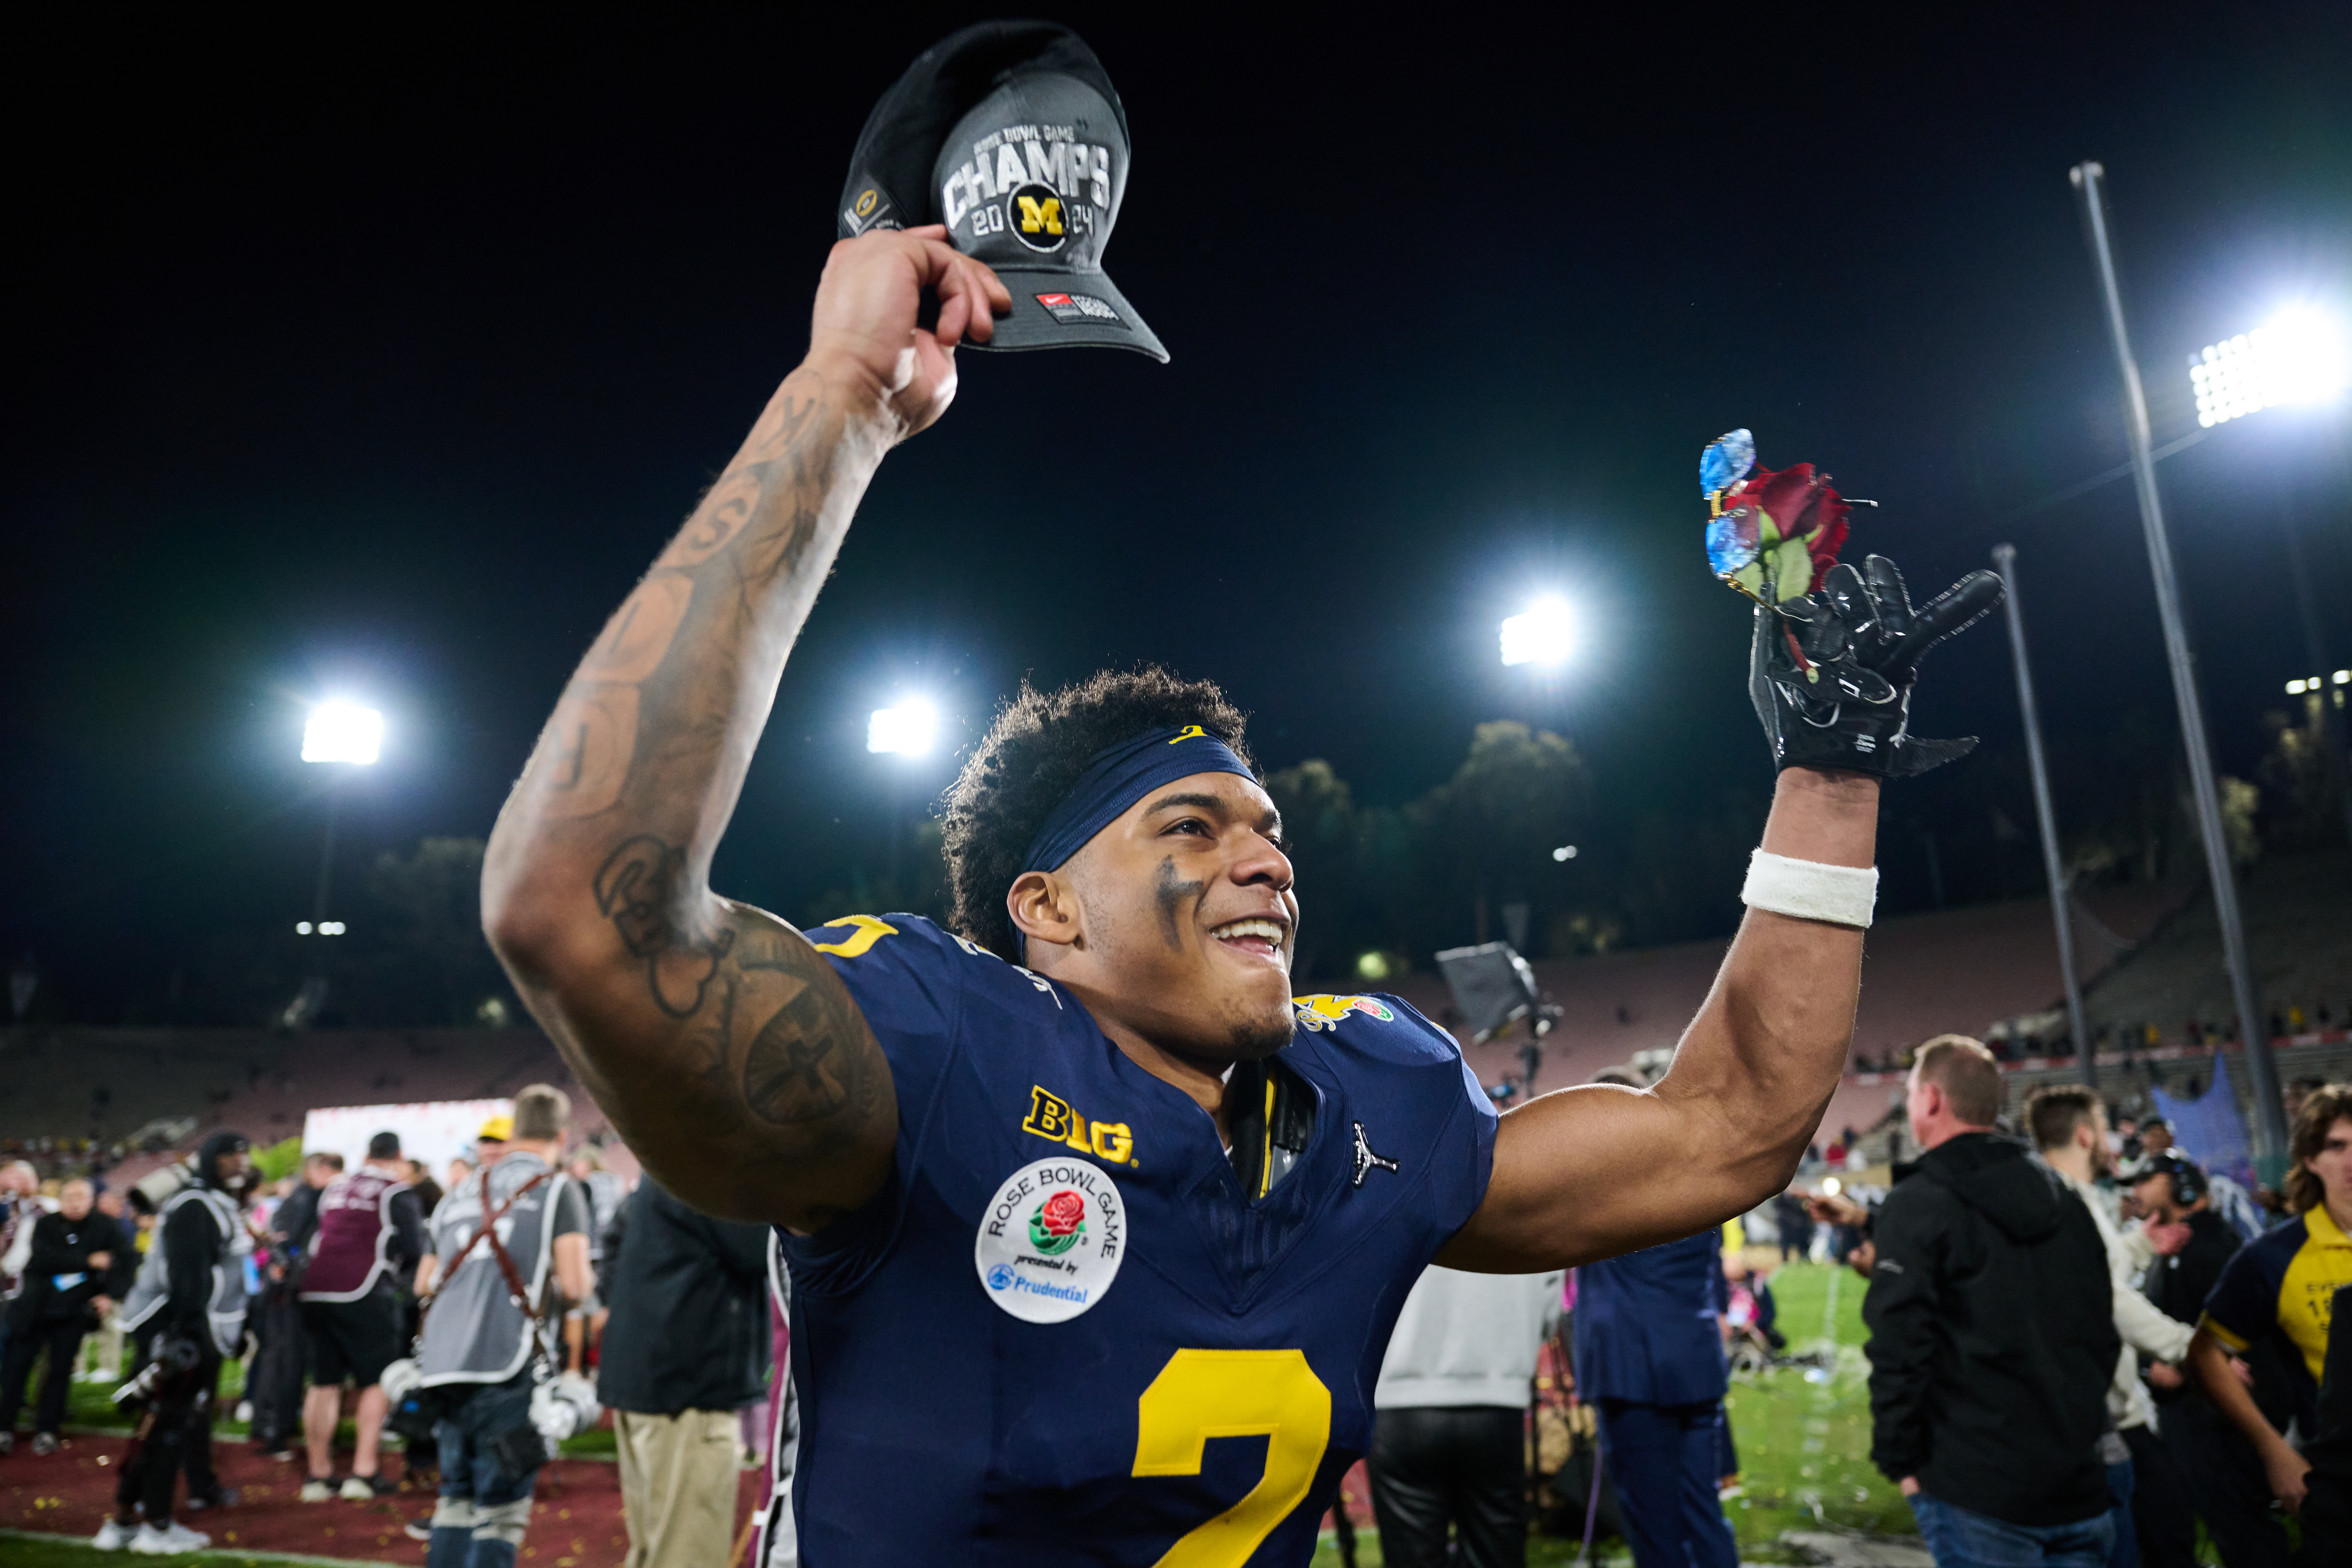 Michigan football player celebrates on field after winning Rose Bowl